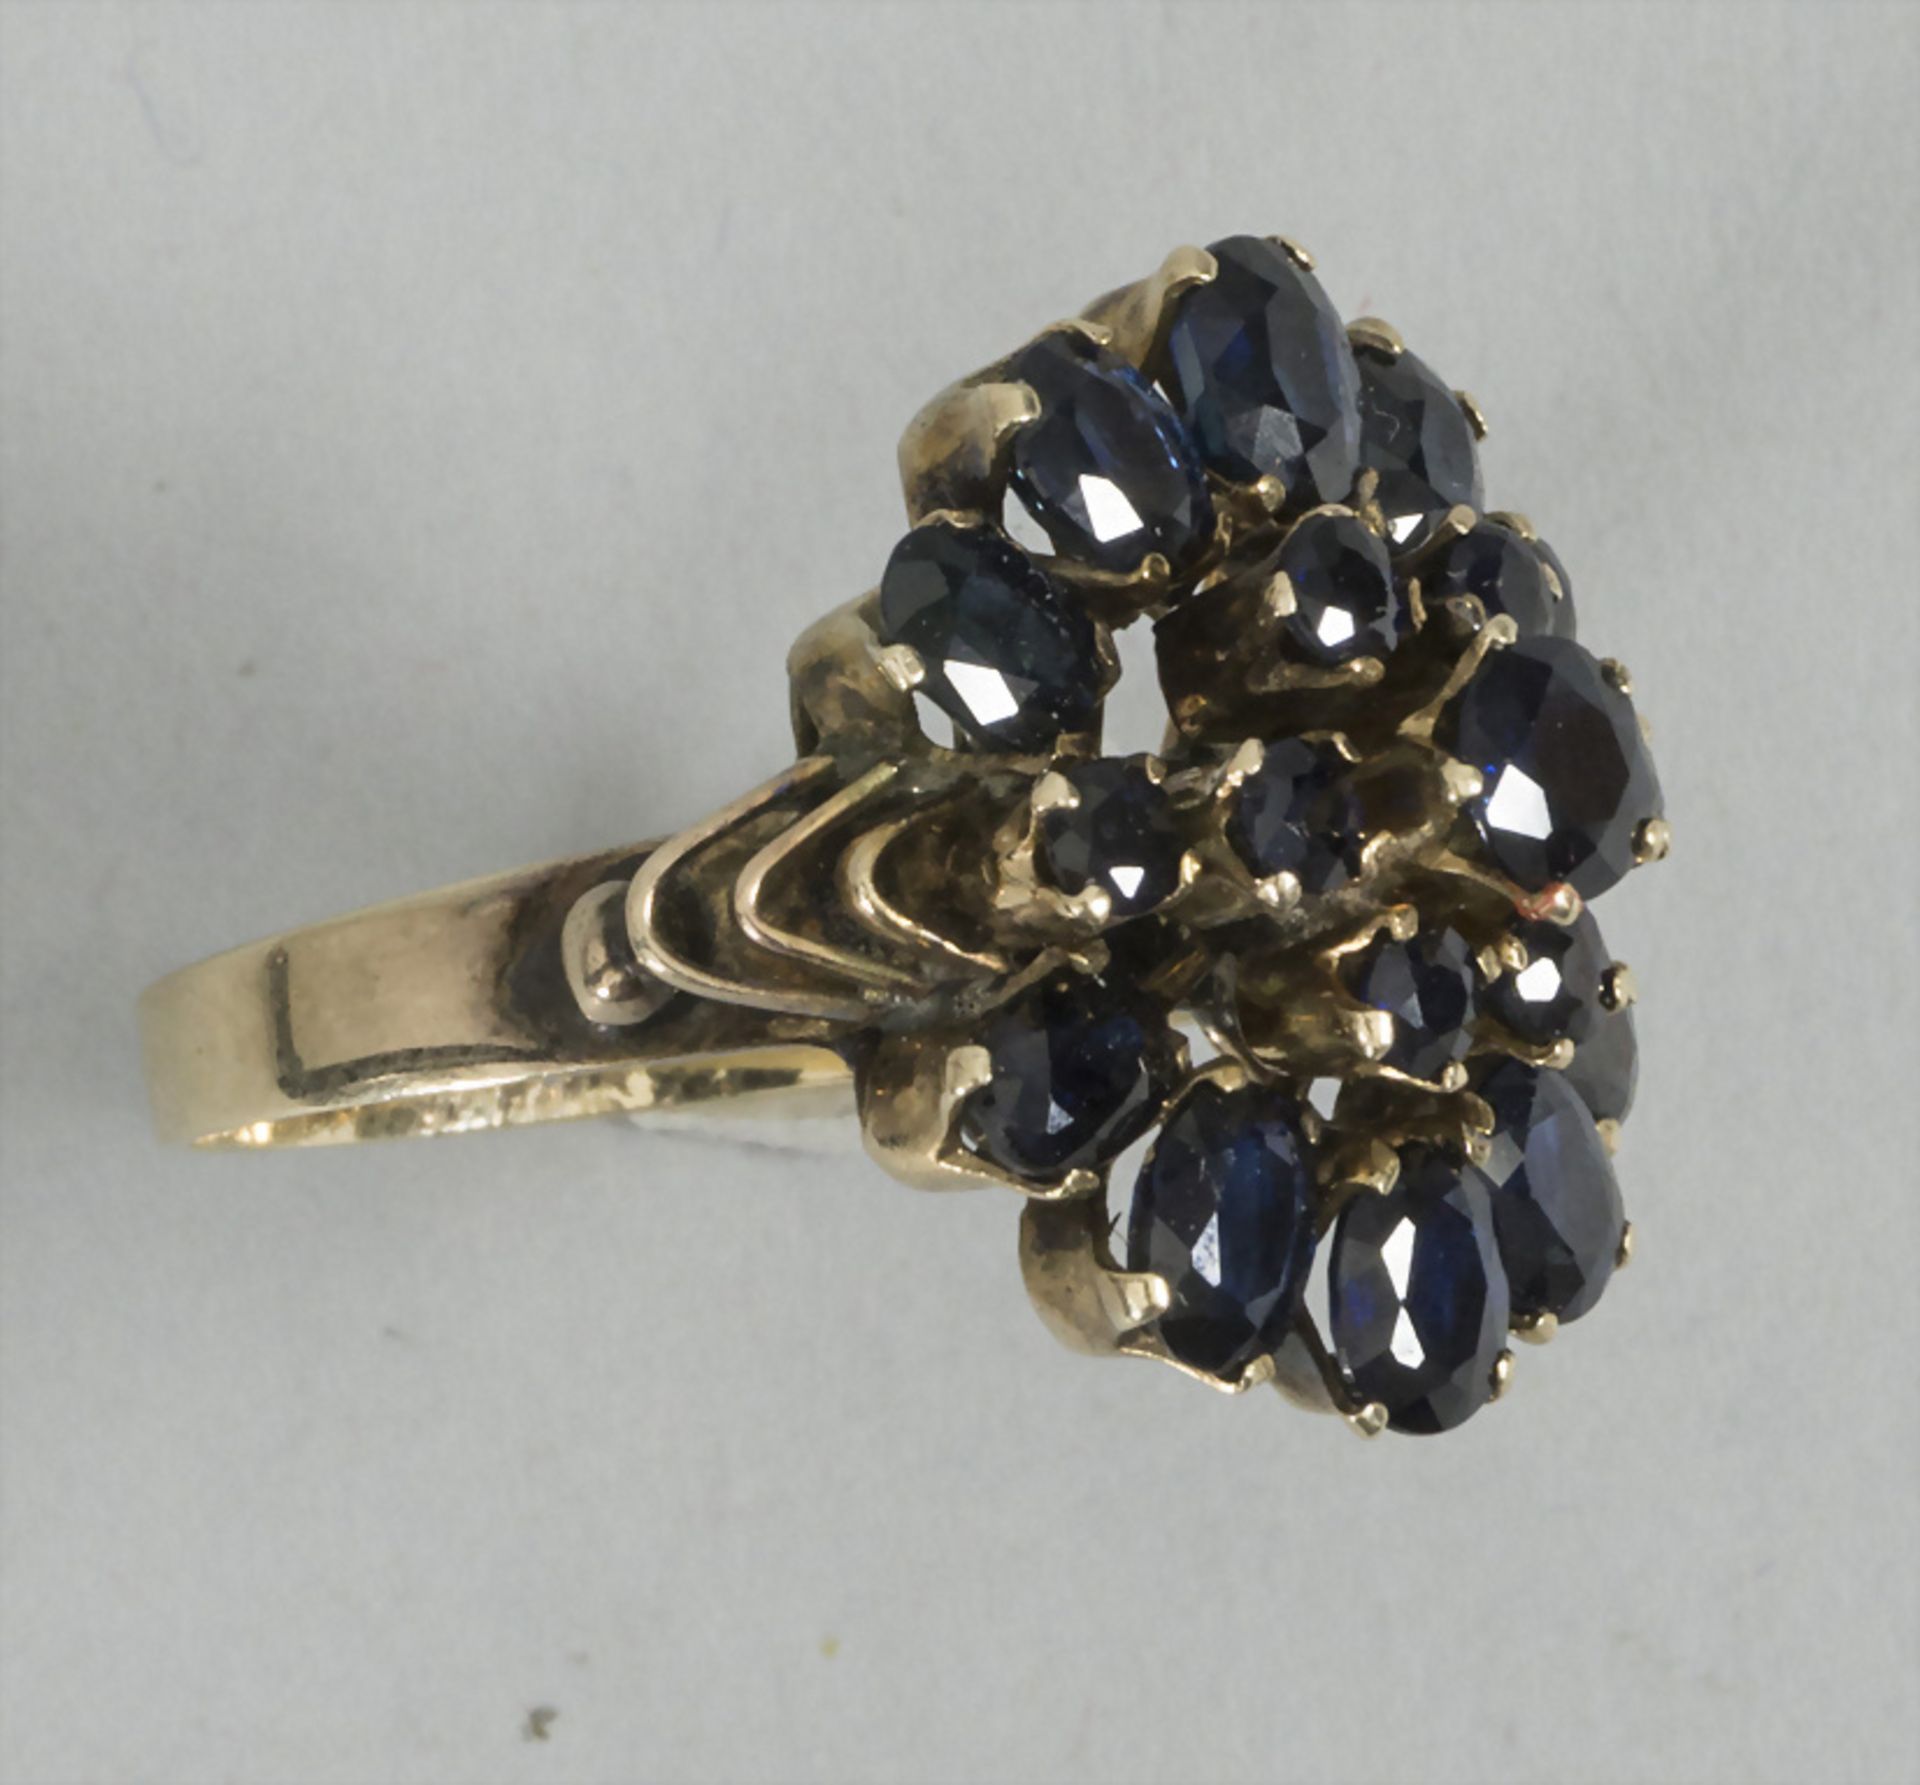 Damenring / A ladies ring in 18k gold - Image 2 of 4